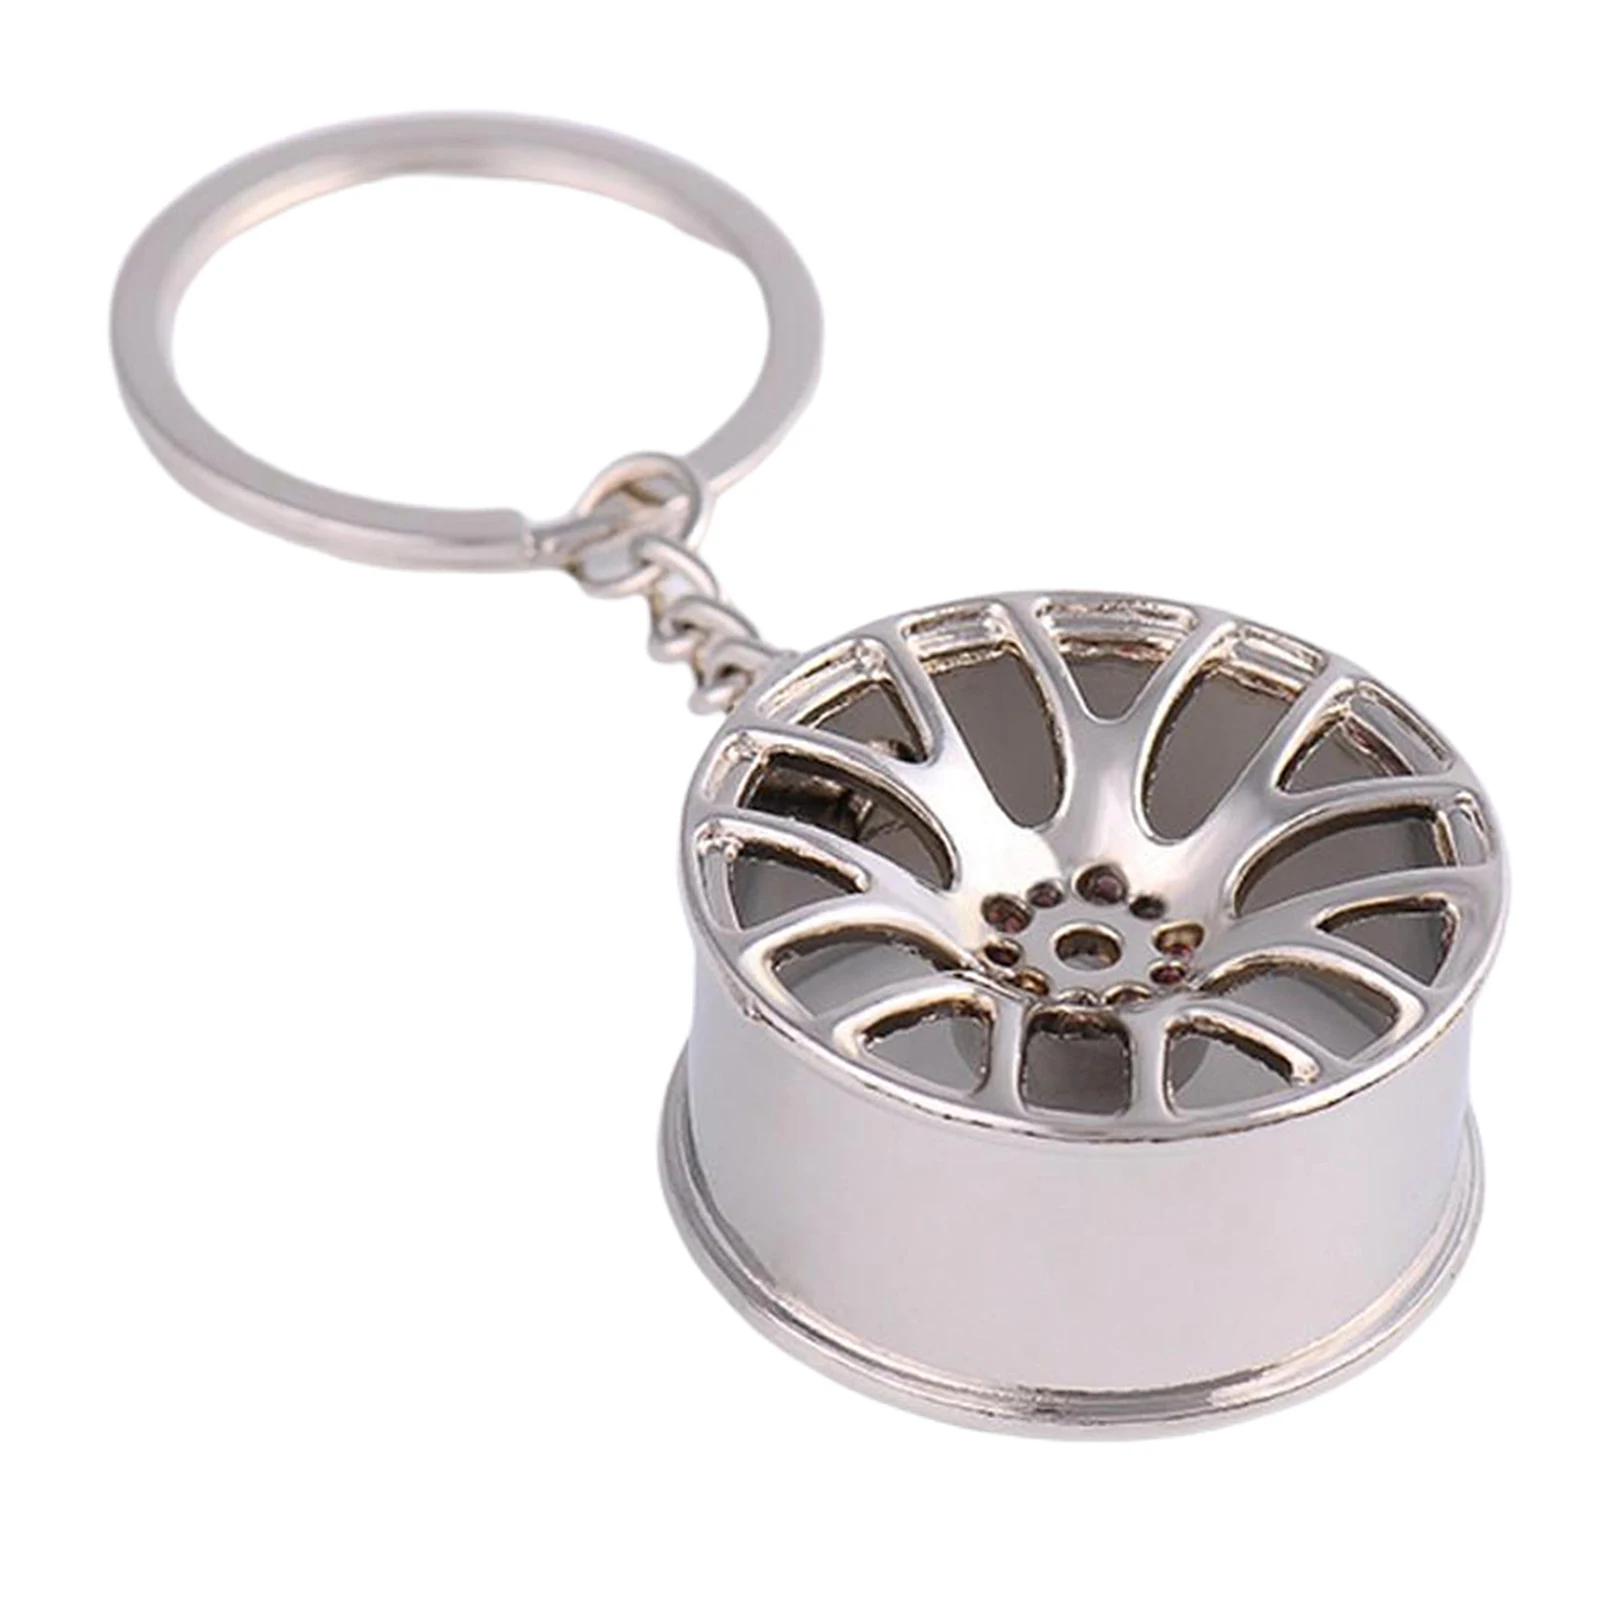 Metal Wheel Rim Keychain Auto Car Handbag Bag Wheel Hubs Key Chain Keyring Holder Hanging Pendant Charm Decor for Woman Man